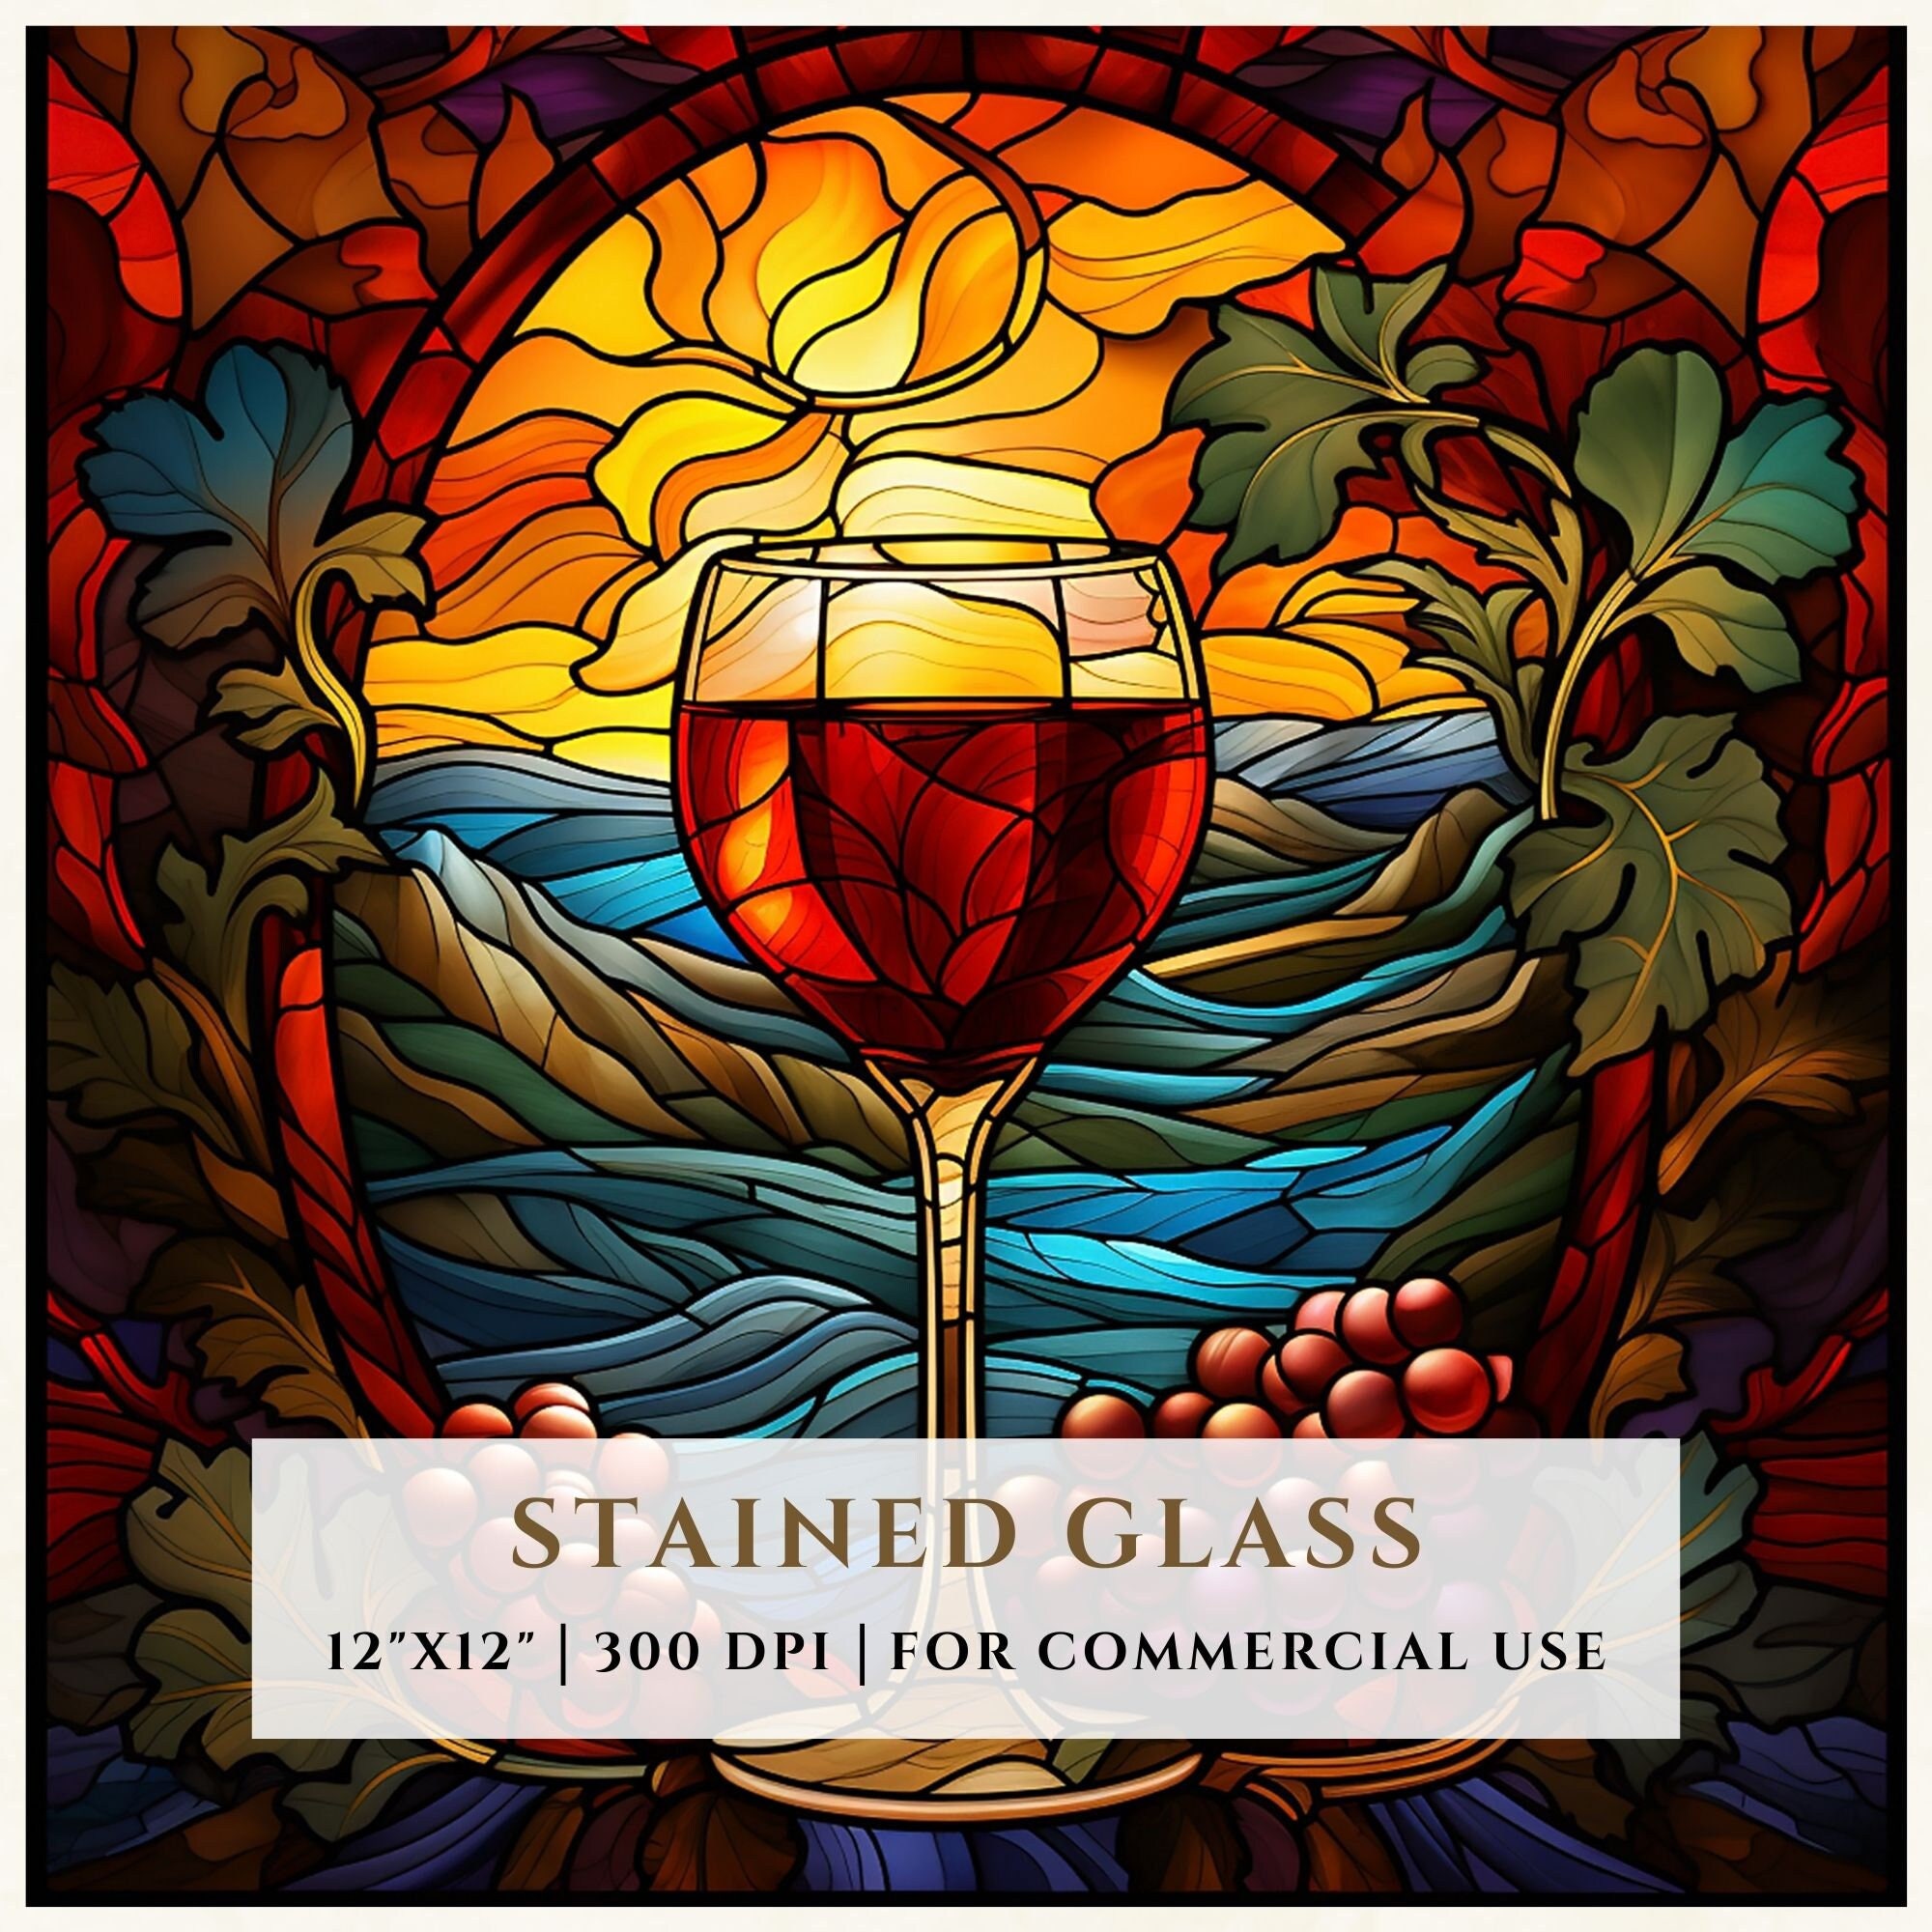 HISTORY COMPANY “Bàcaro di Veneto” Rustic Italian Stemless Wine Glass  4-Piece Set (Gift Box Collection)